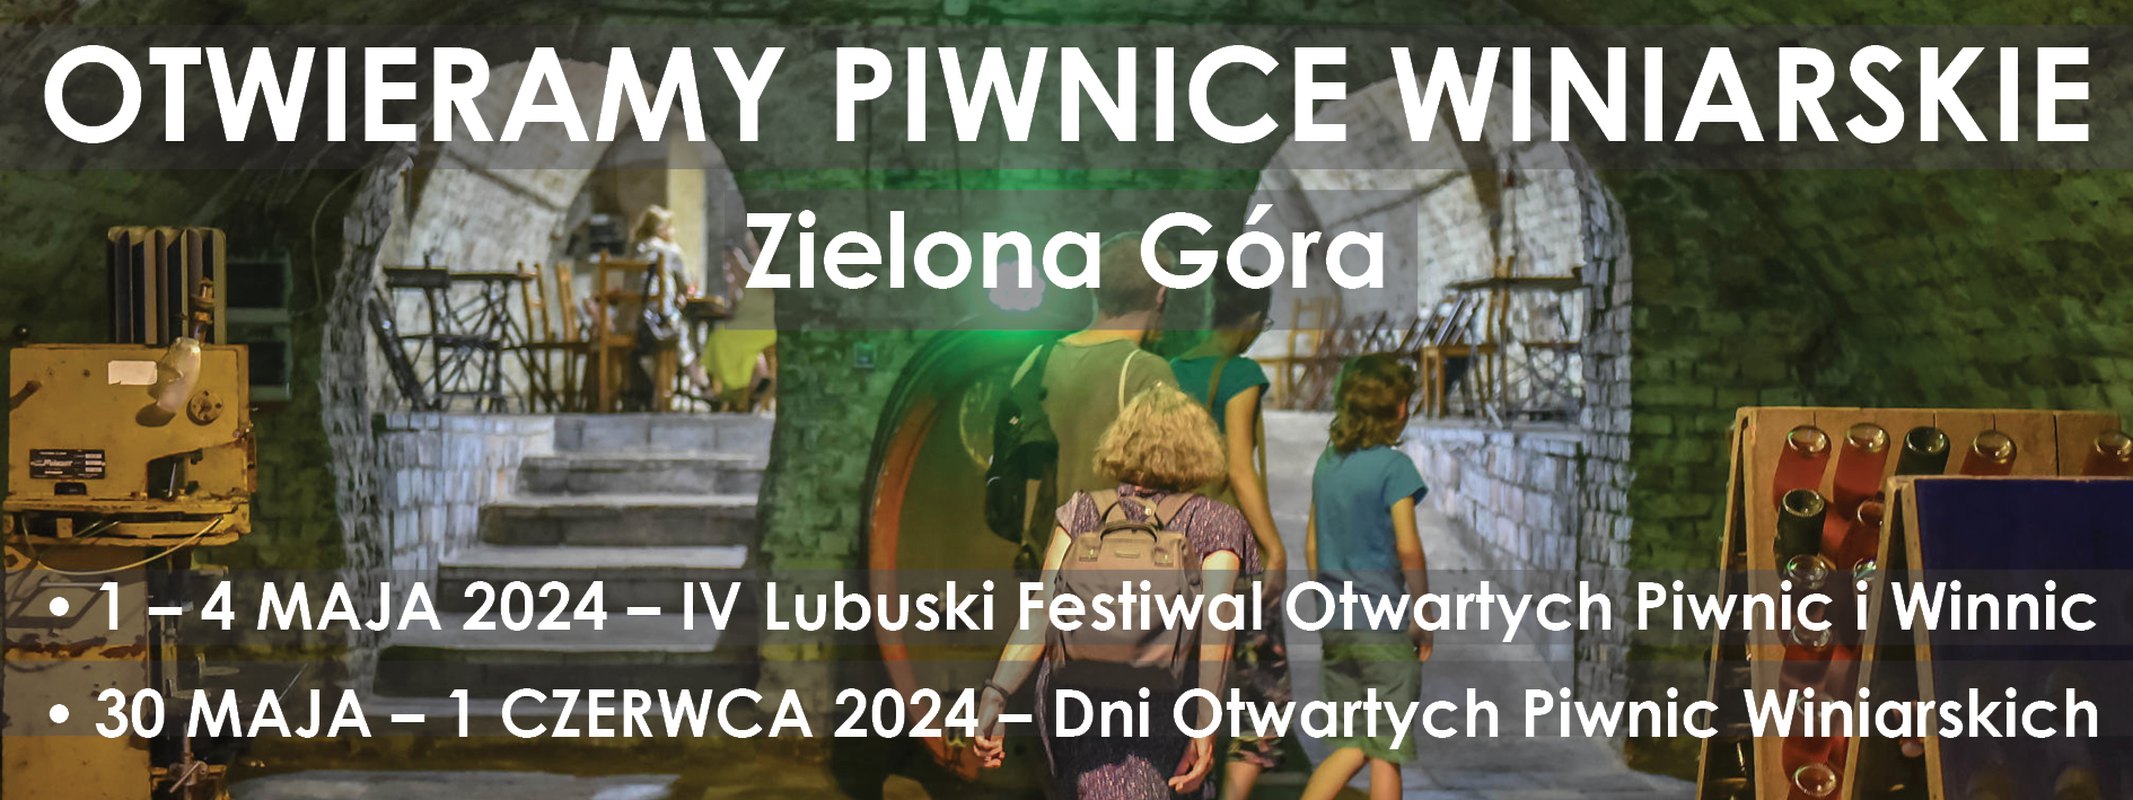 IV Lubuski Festiwal Otwartych Piwnic i Winnic